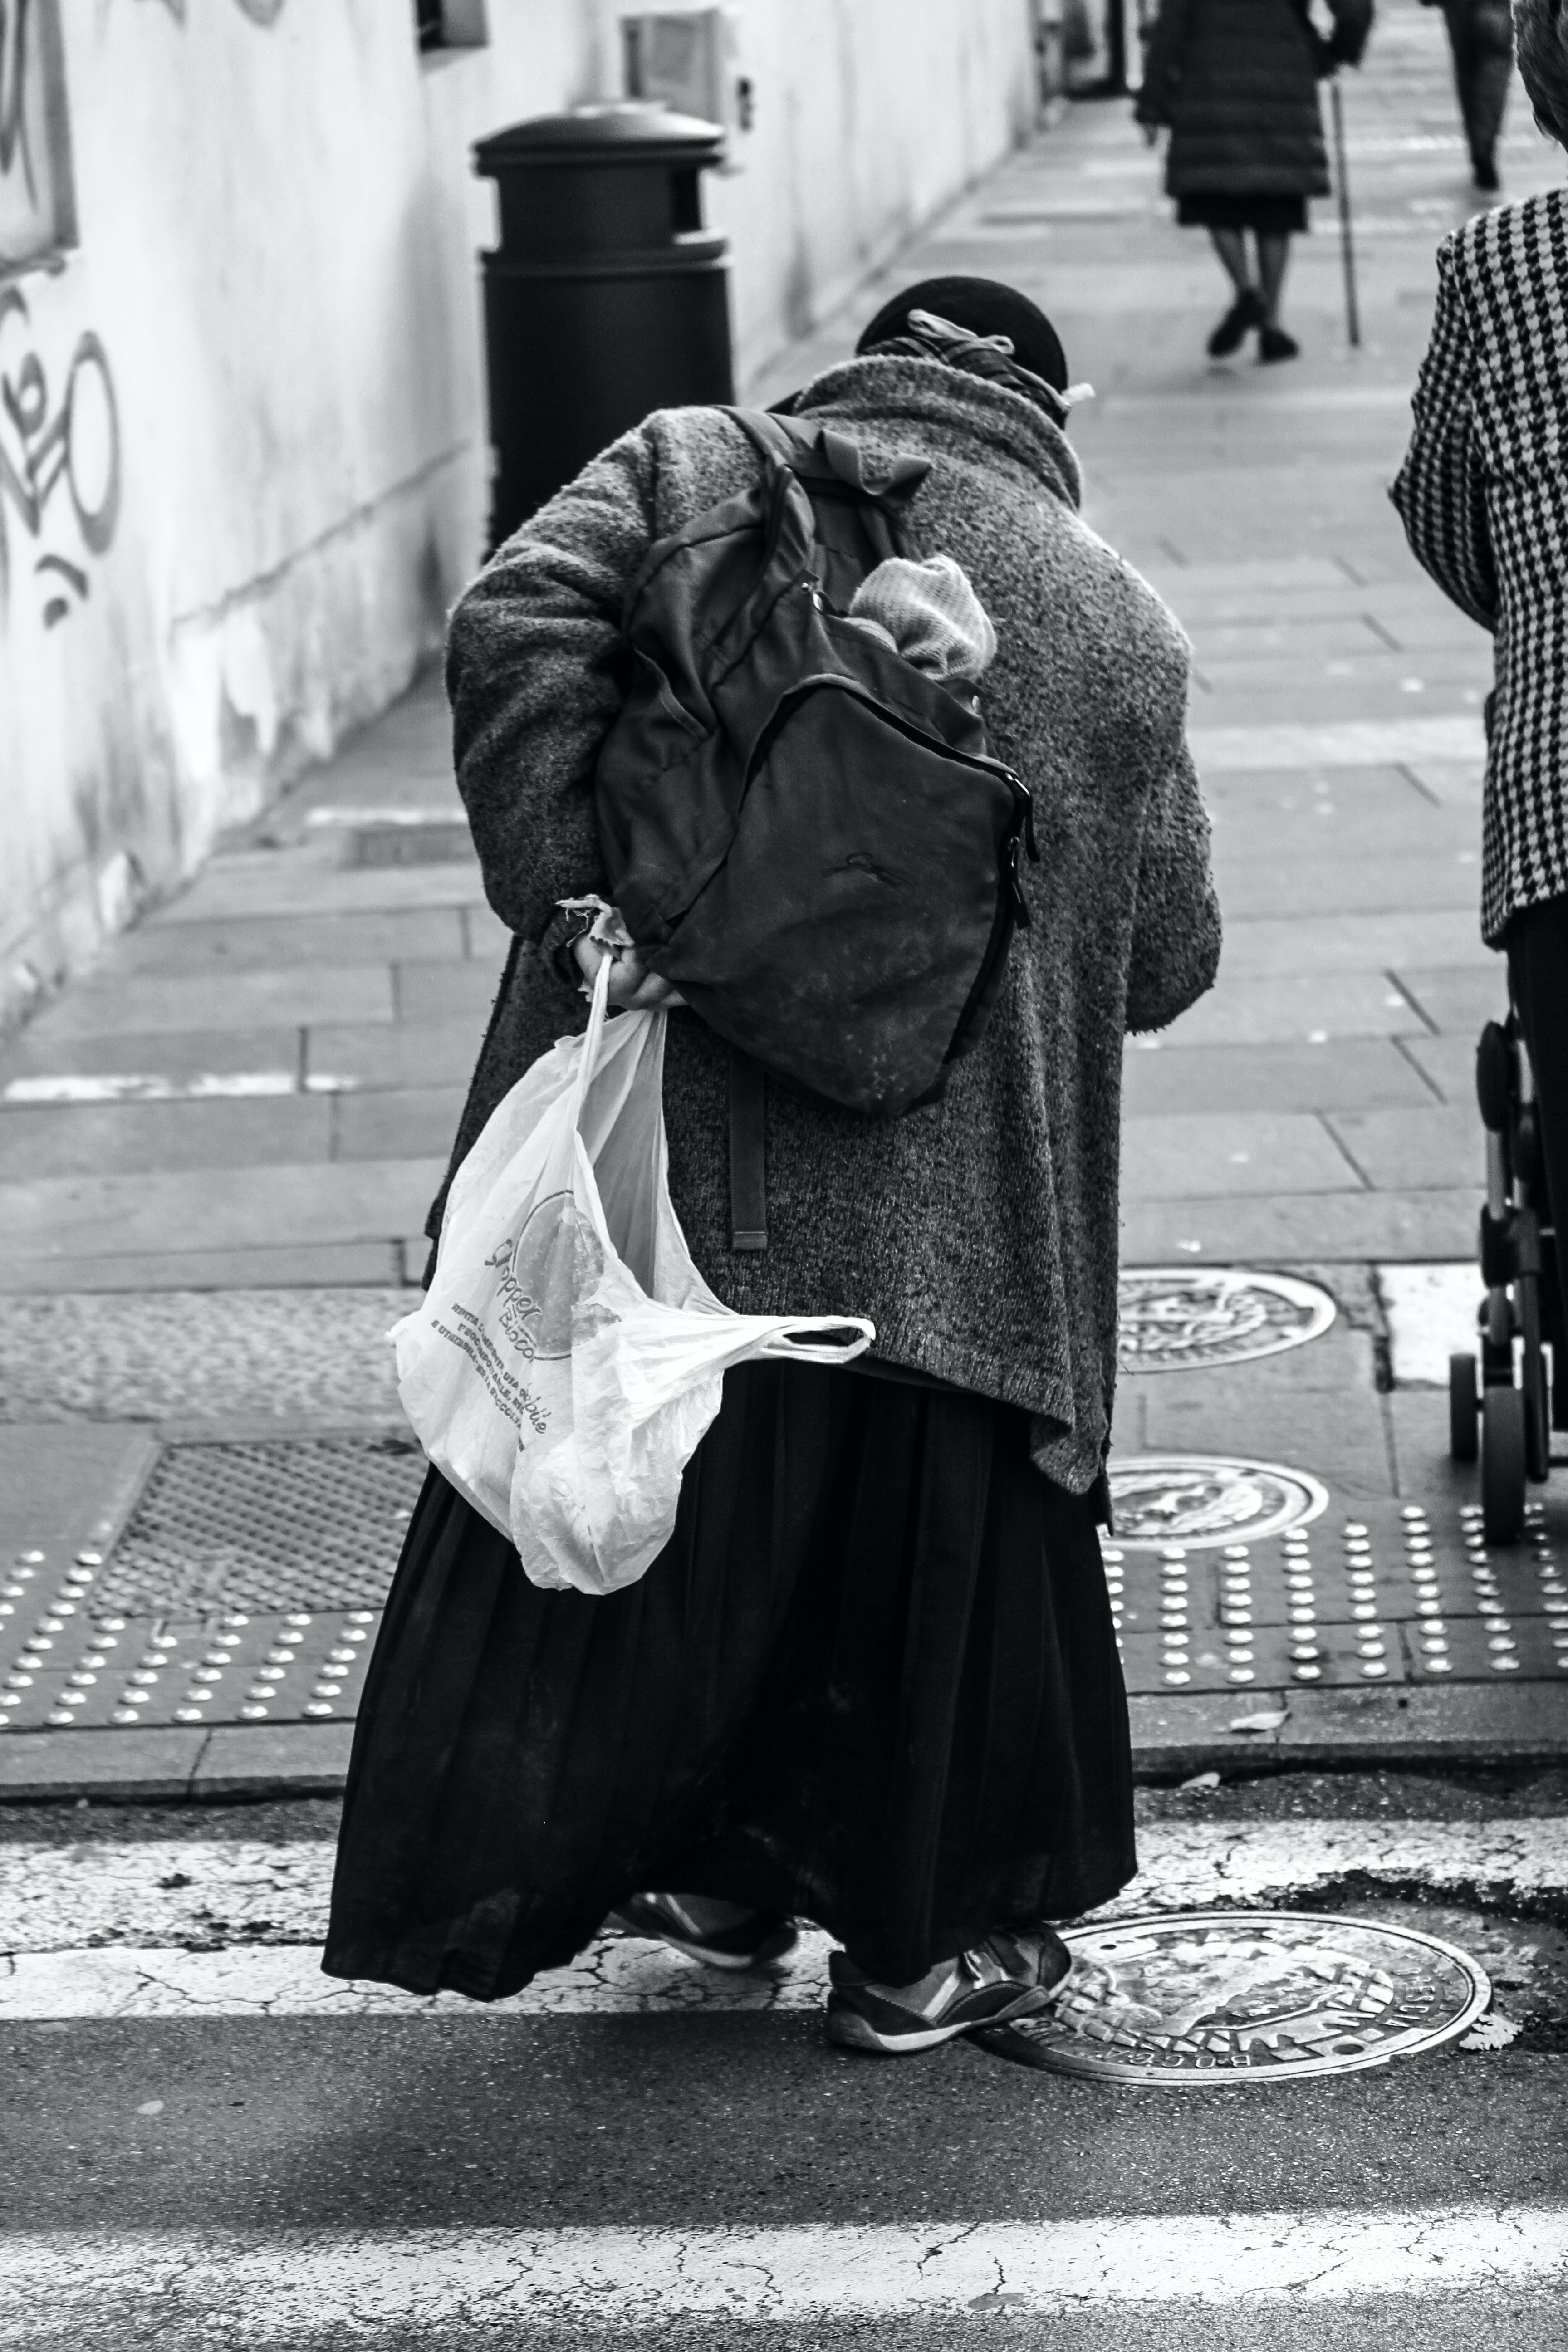 Kathy had been helping the poor woman | Photo: Pexels